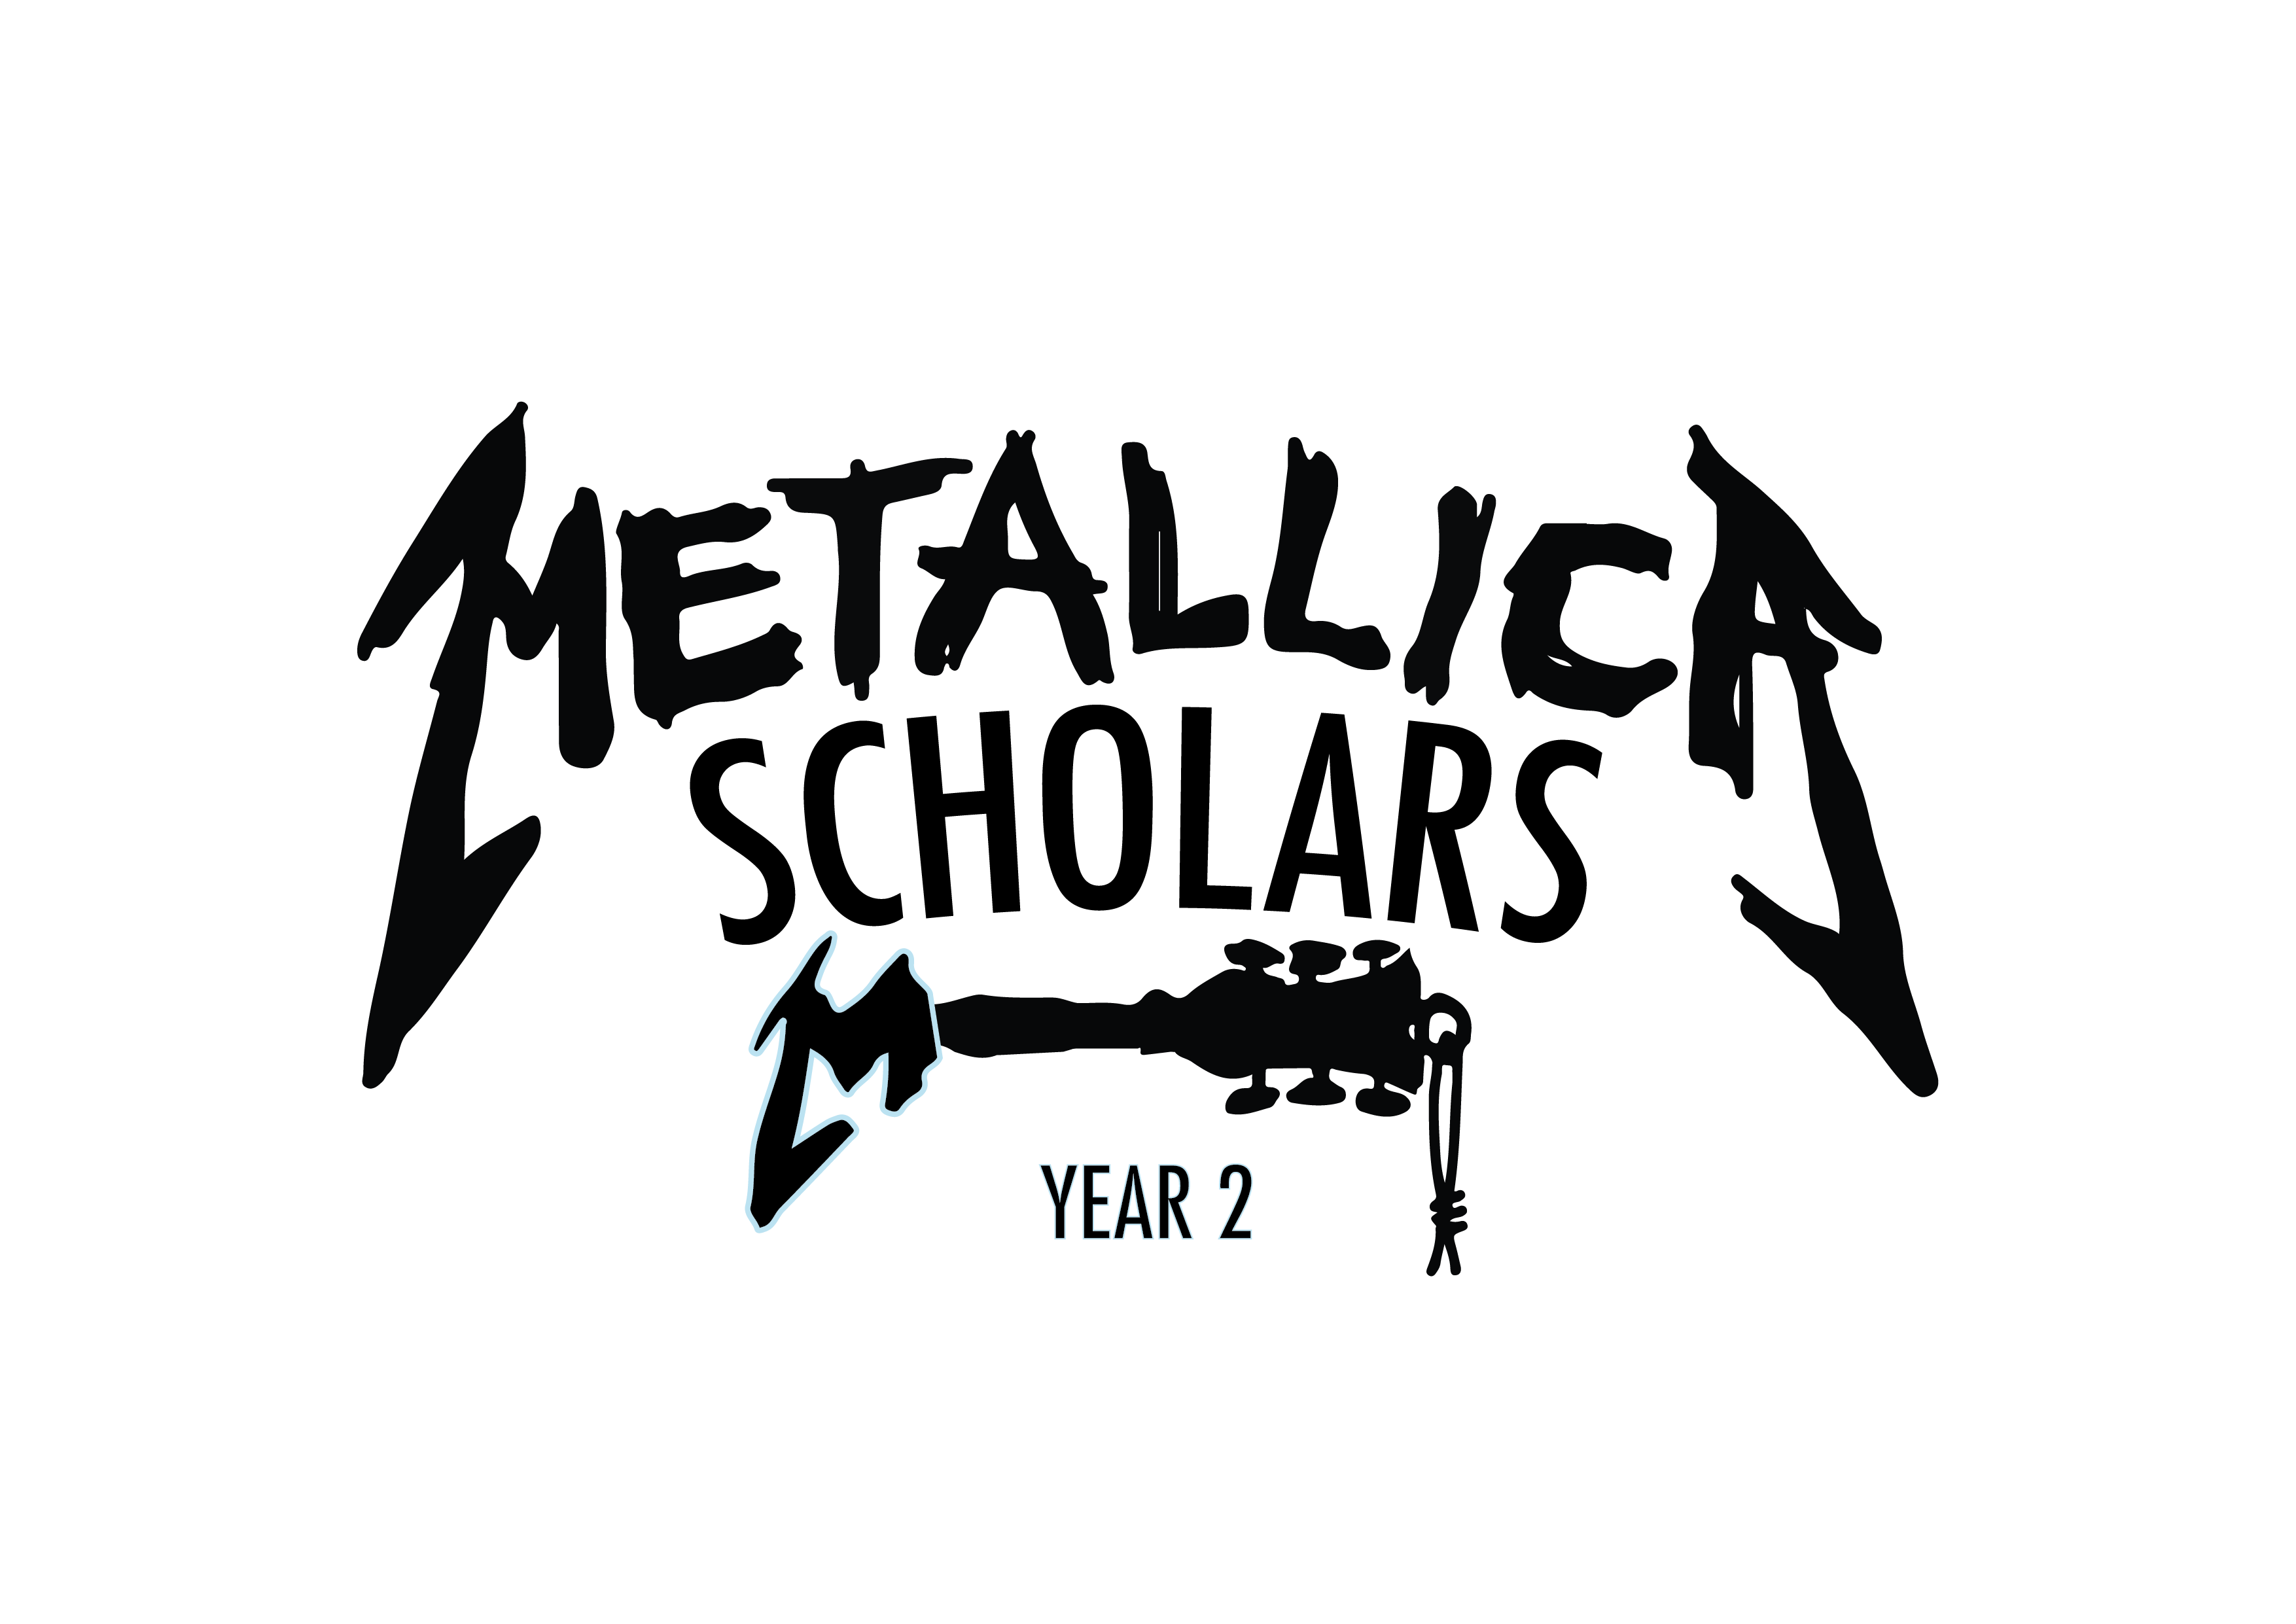 Metallica Scholars Year 2 logo